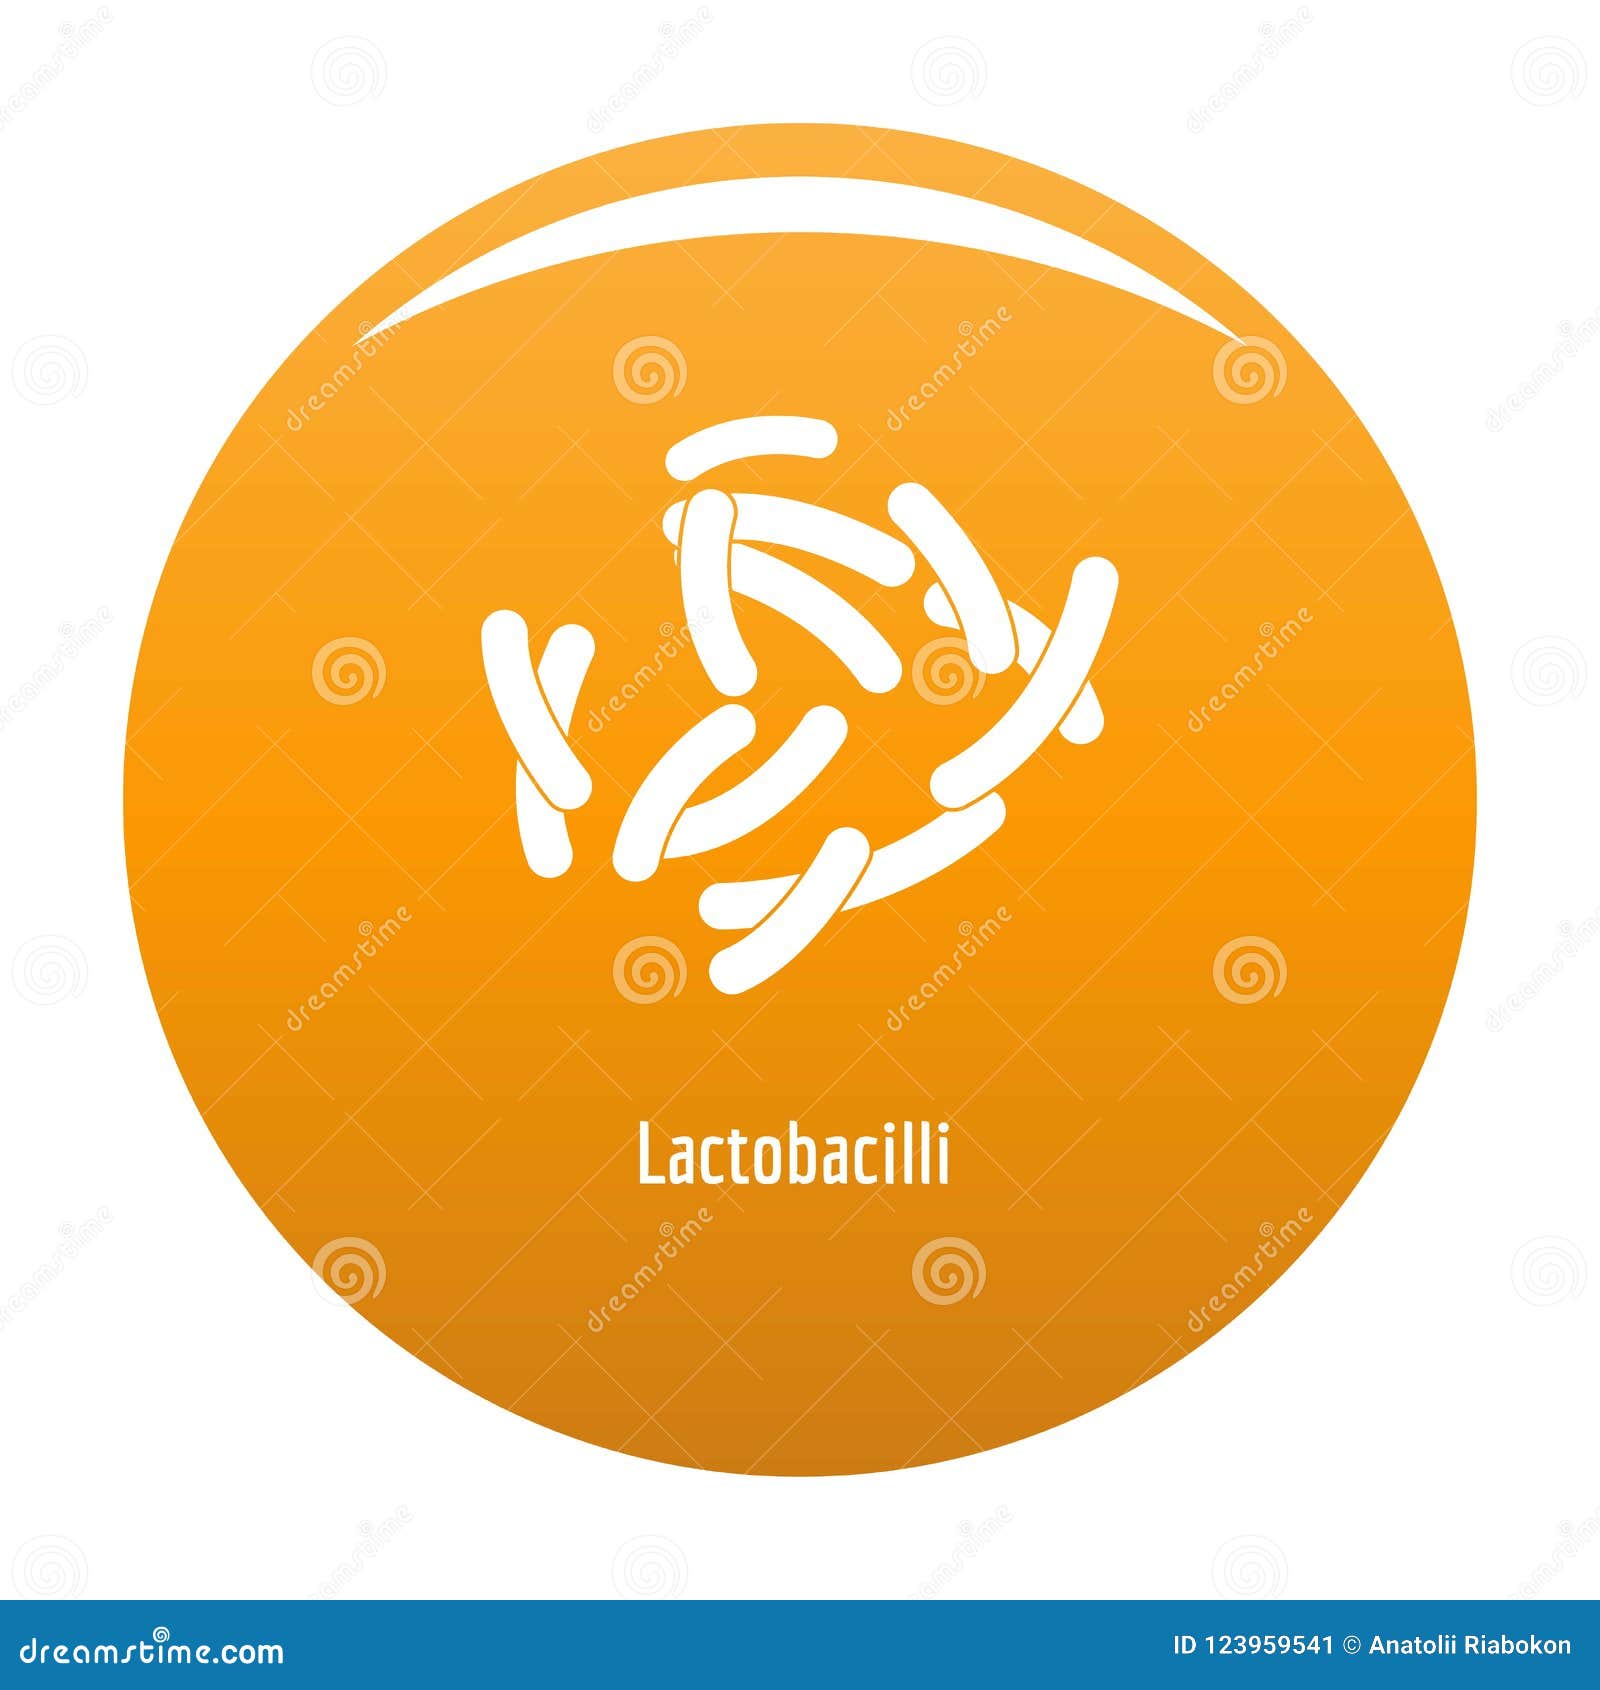 lactobacilli icon orange